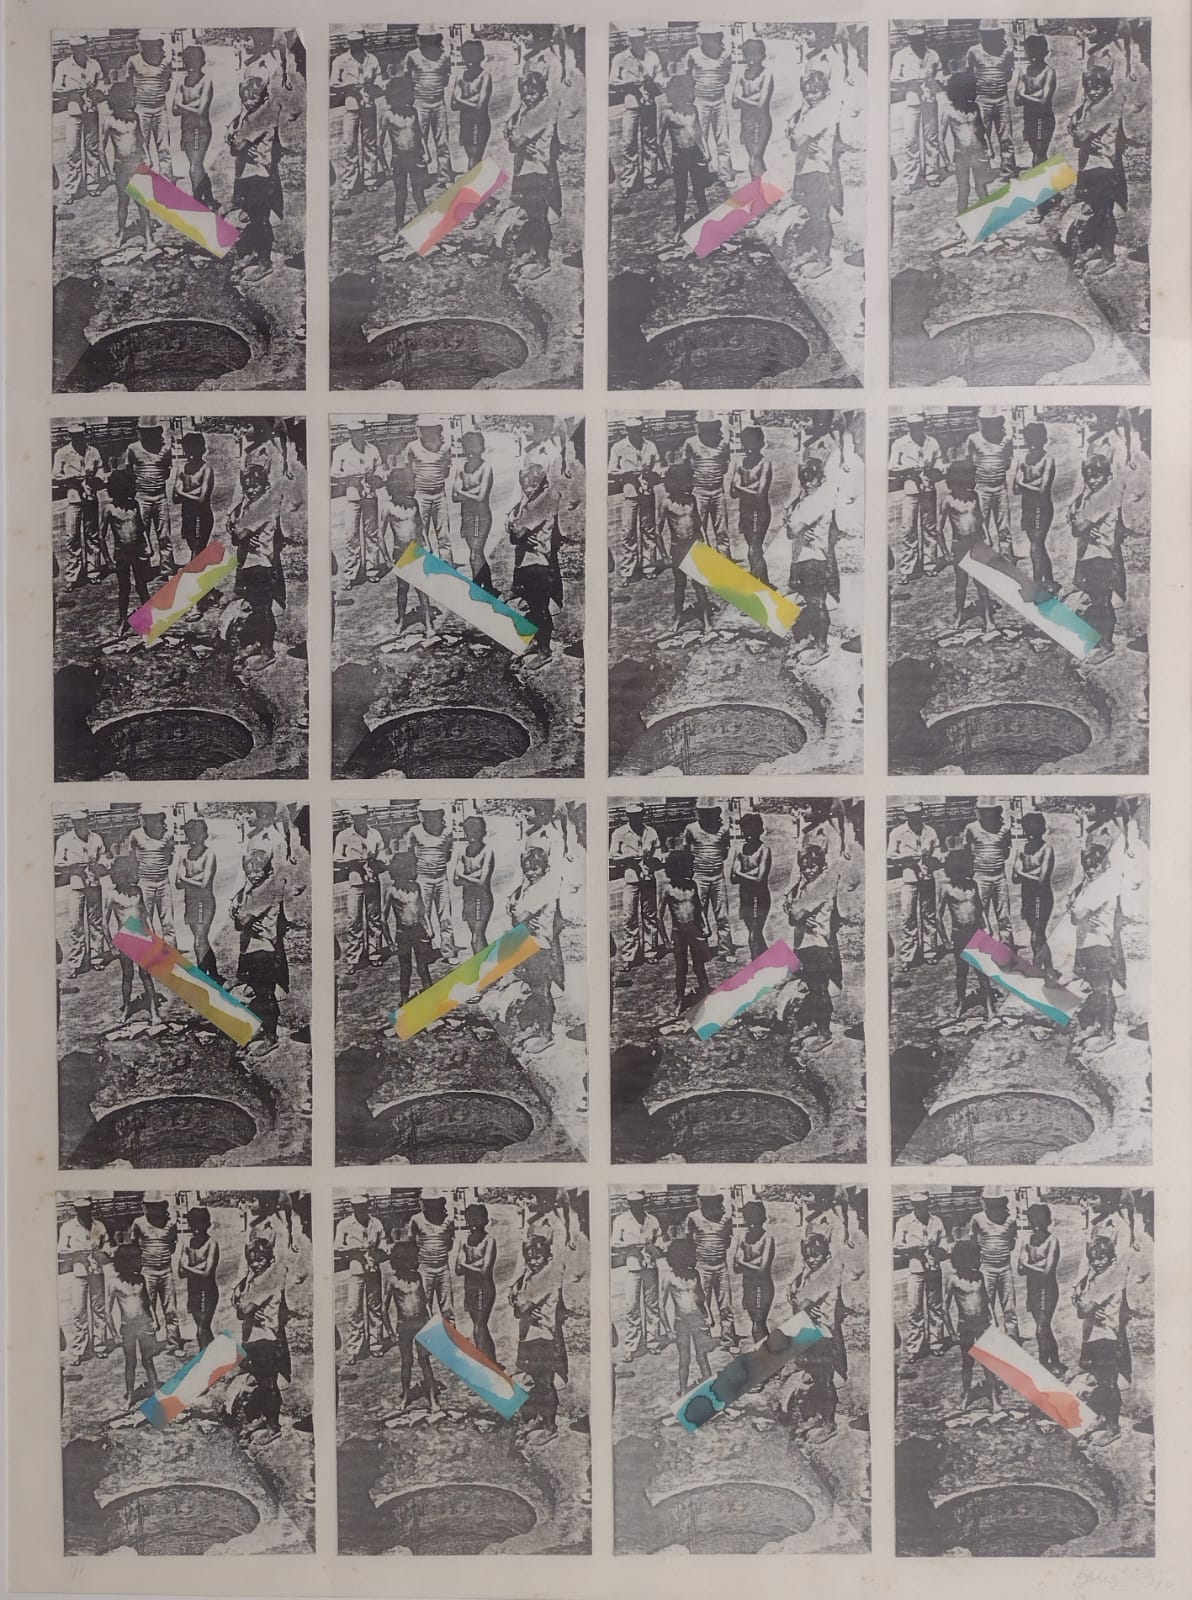 BENÉ FONTELLES - “Sem título”- Colagem e xerografia - 1/1 - Ass.dat. 1980 inf.dir - 54x 40 cm.